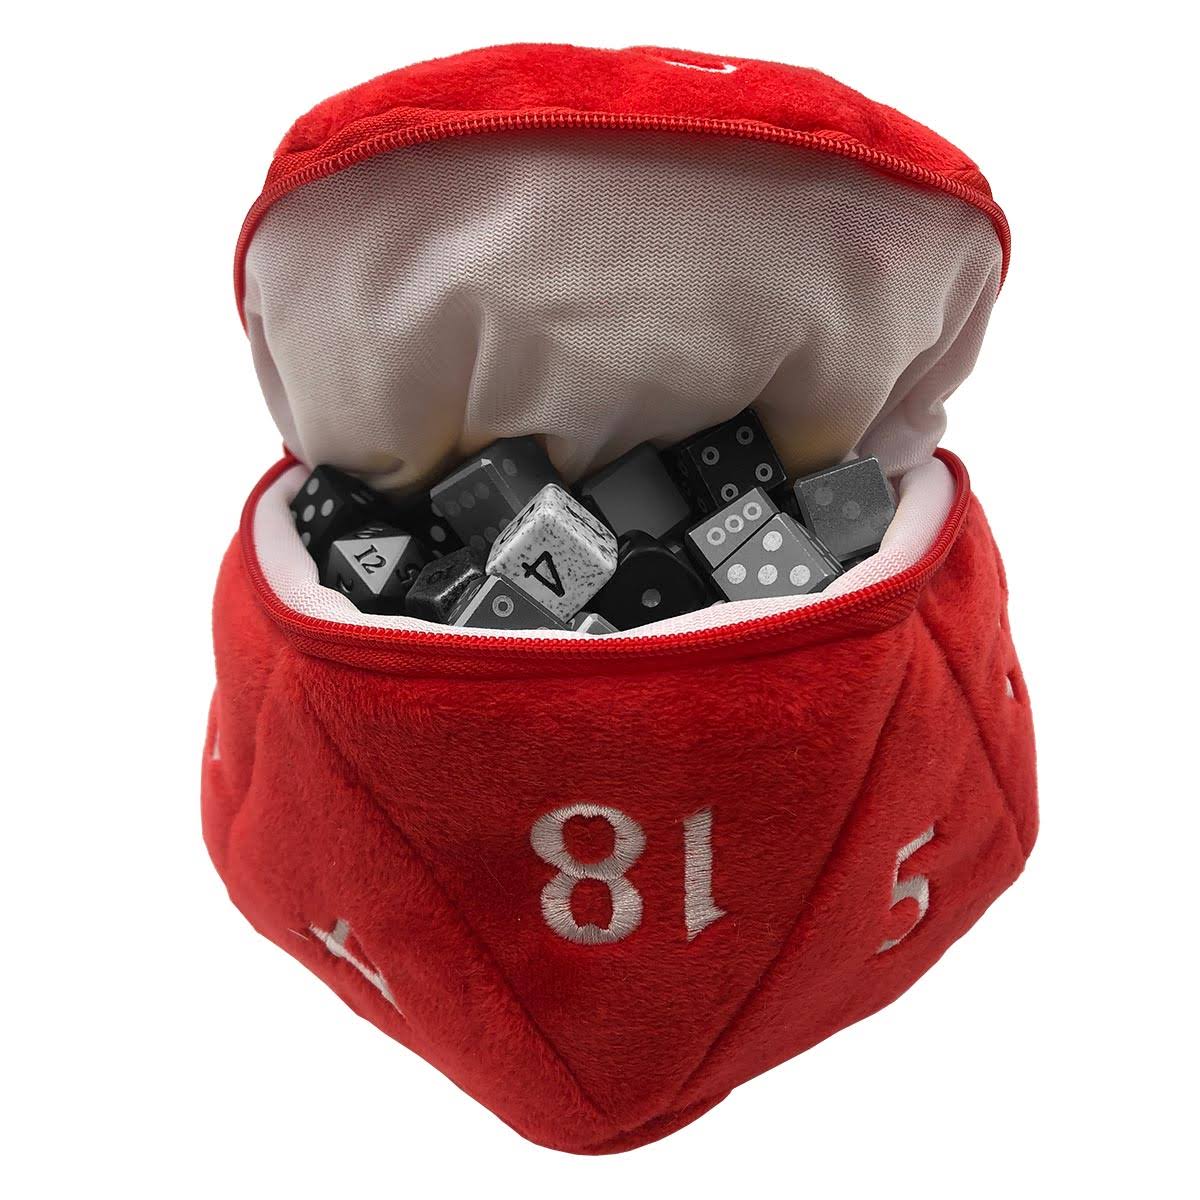 Dungeons & Dragons D20 Plush Dice Bag - Red